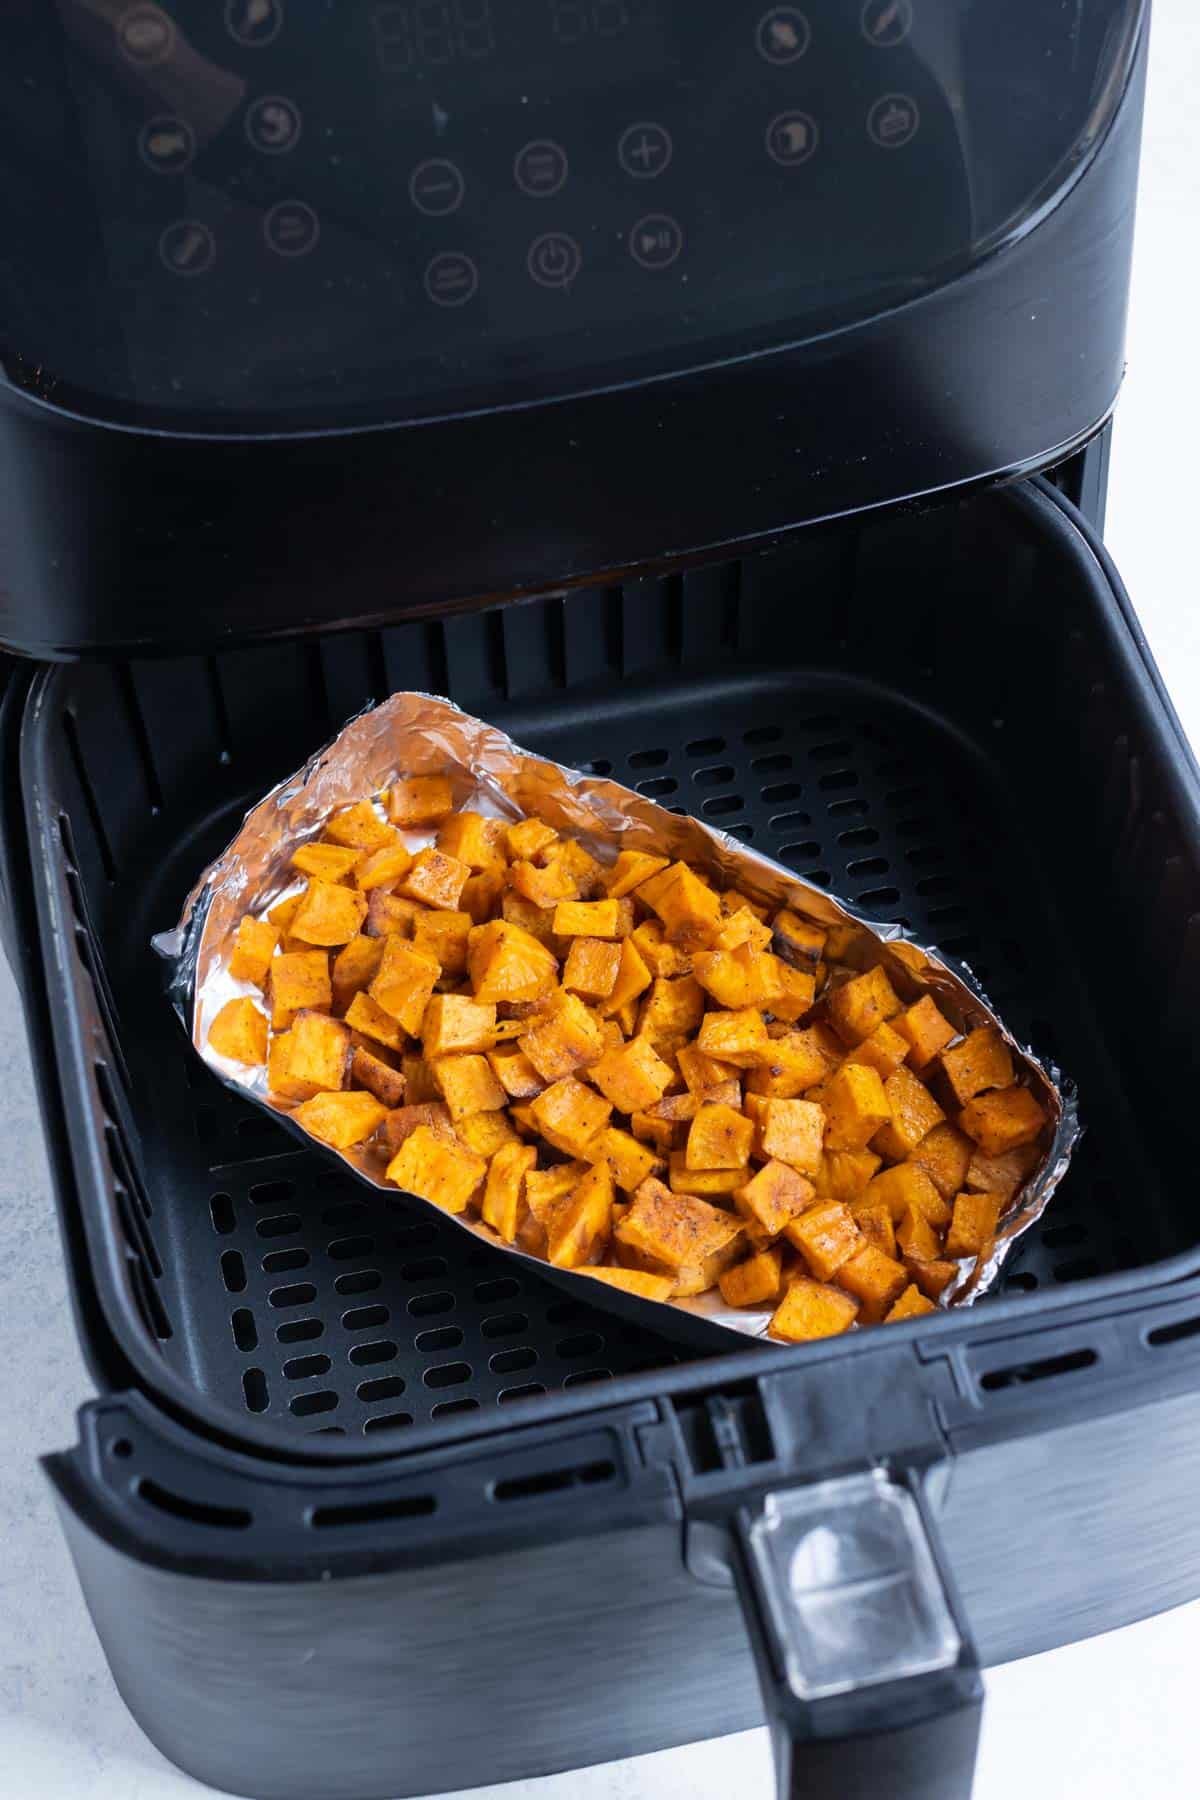 A basket of aluminum foil holding sweet potatoes in an air fryer.